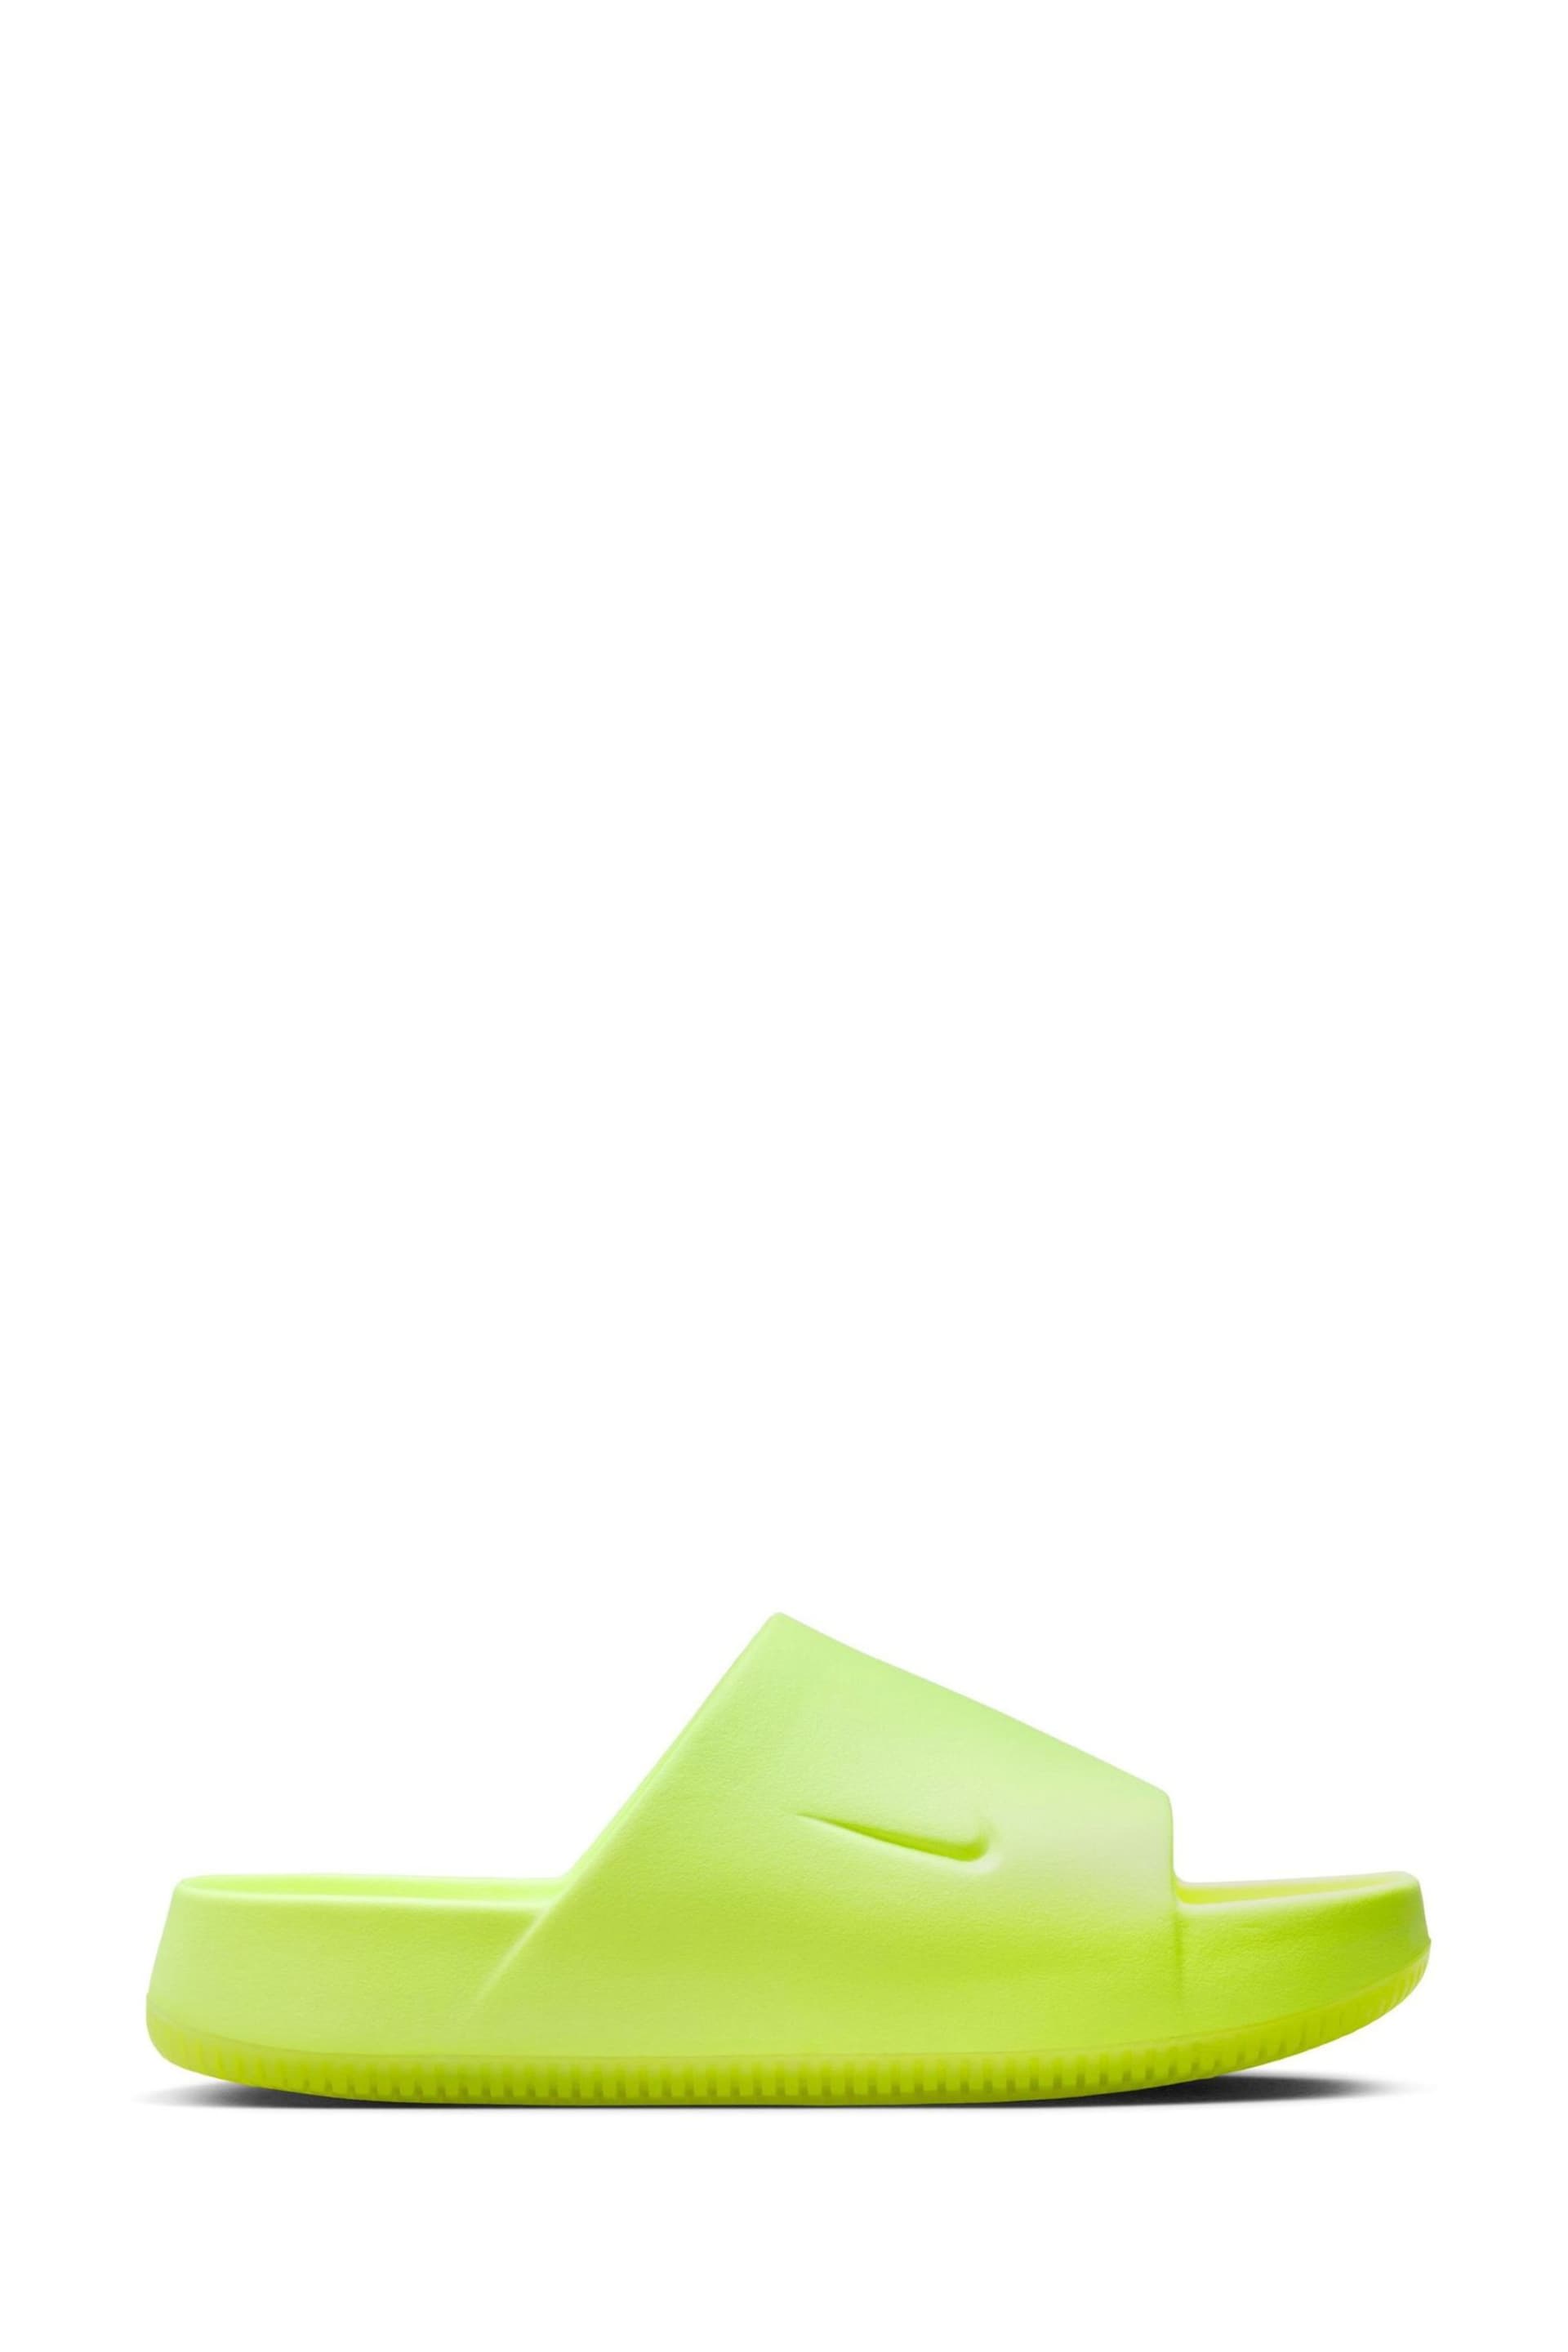 Nike Yellow Calm Slides - Image 1 of 10